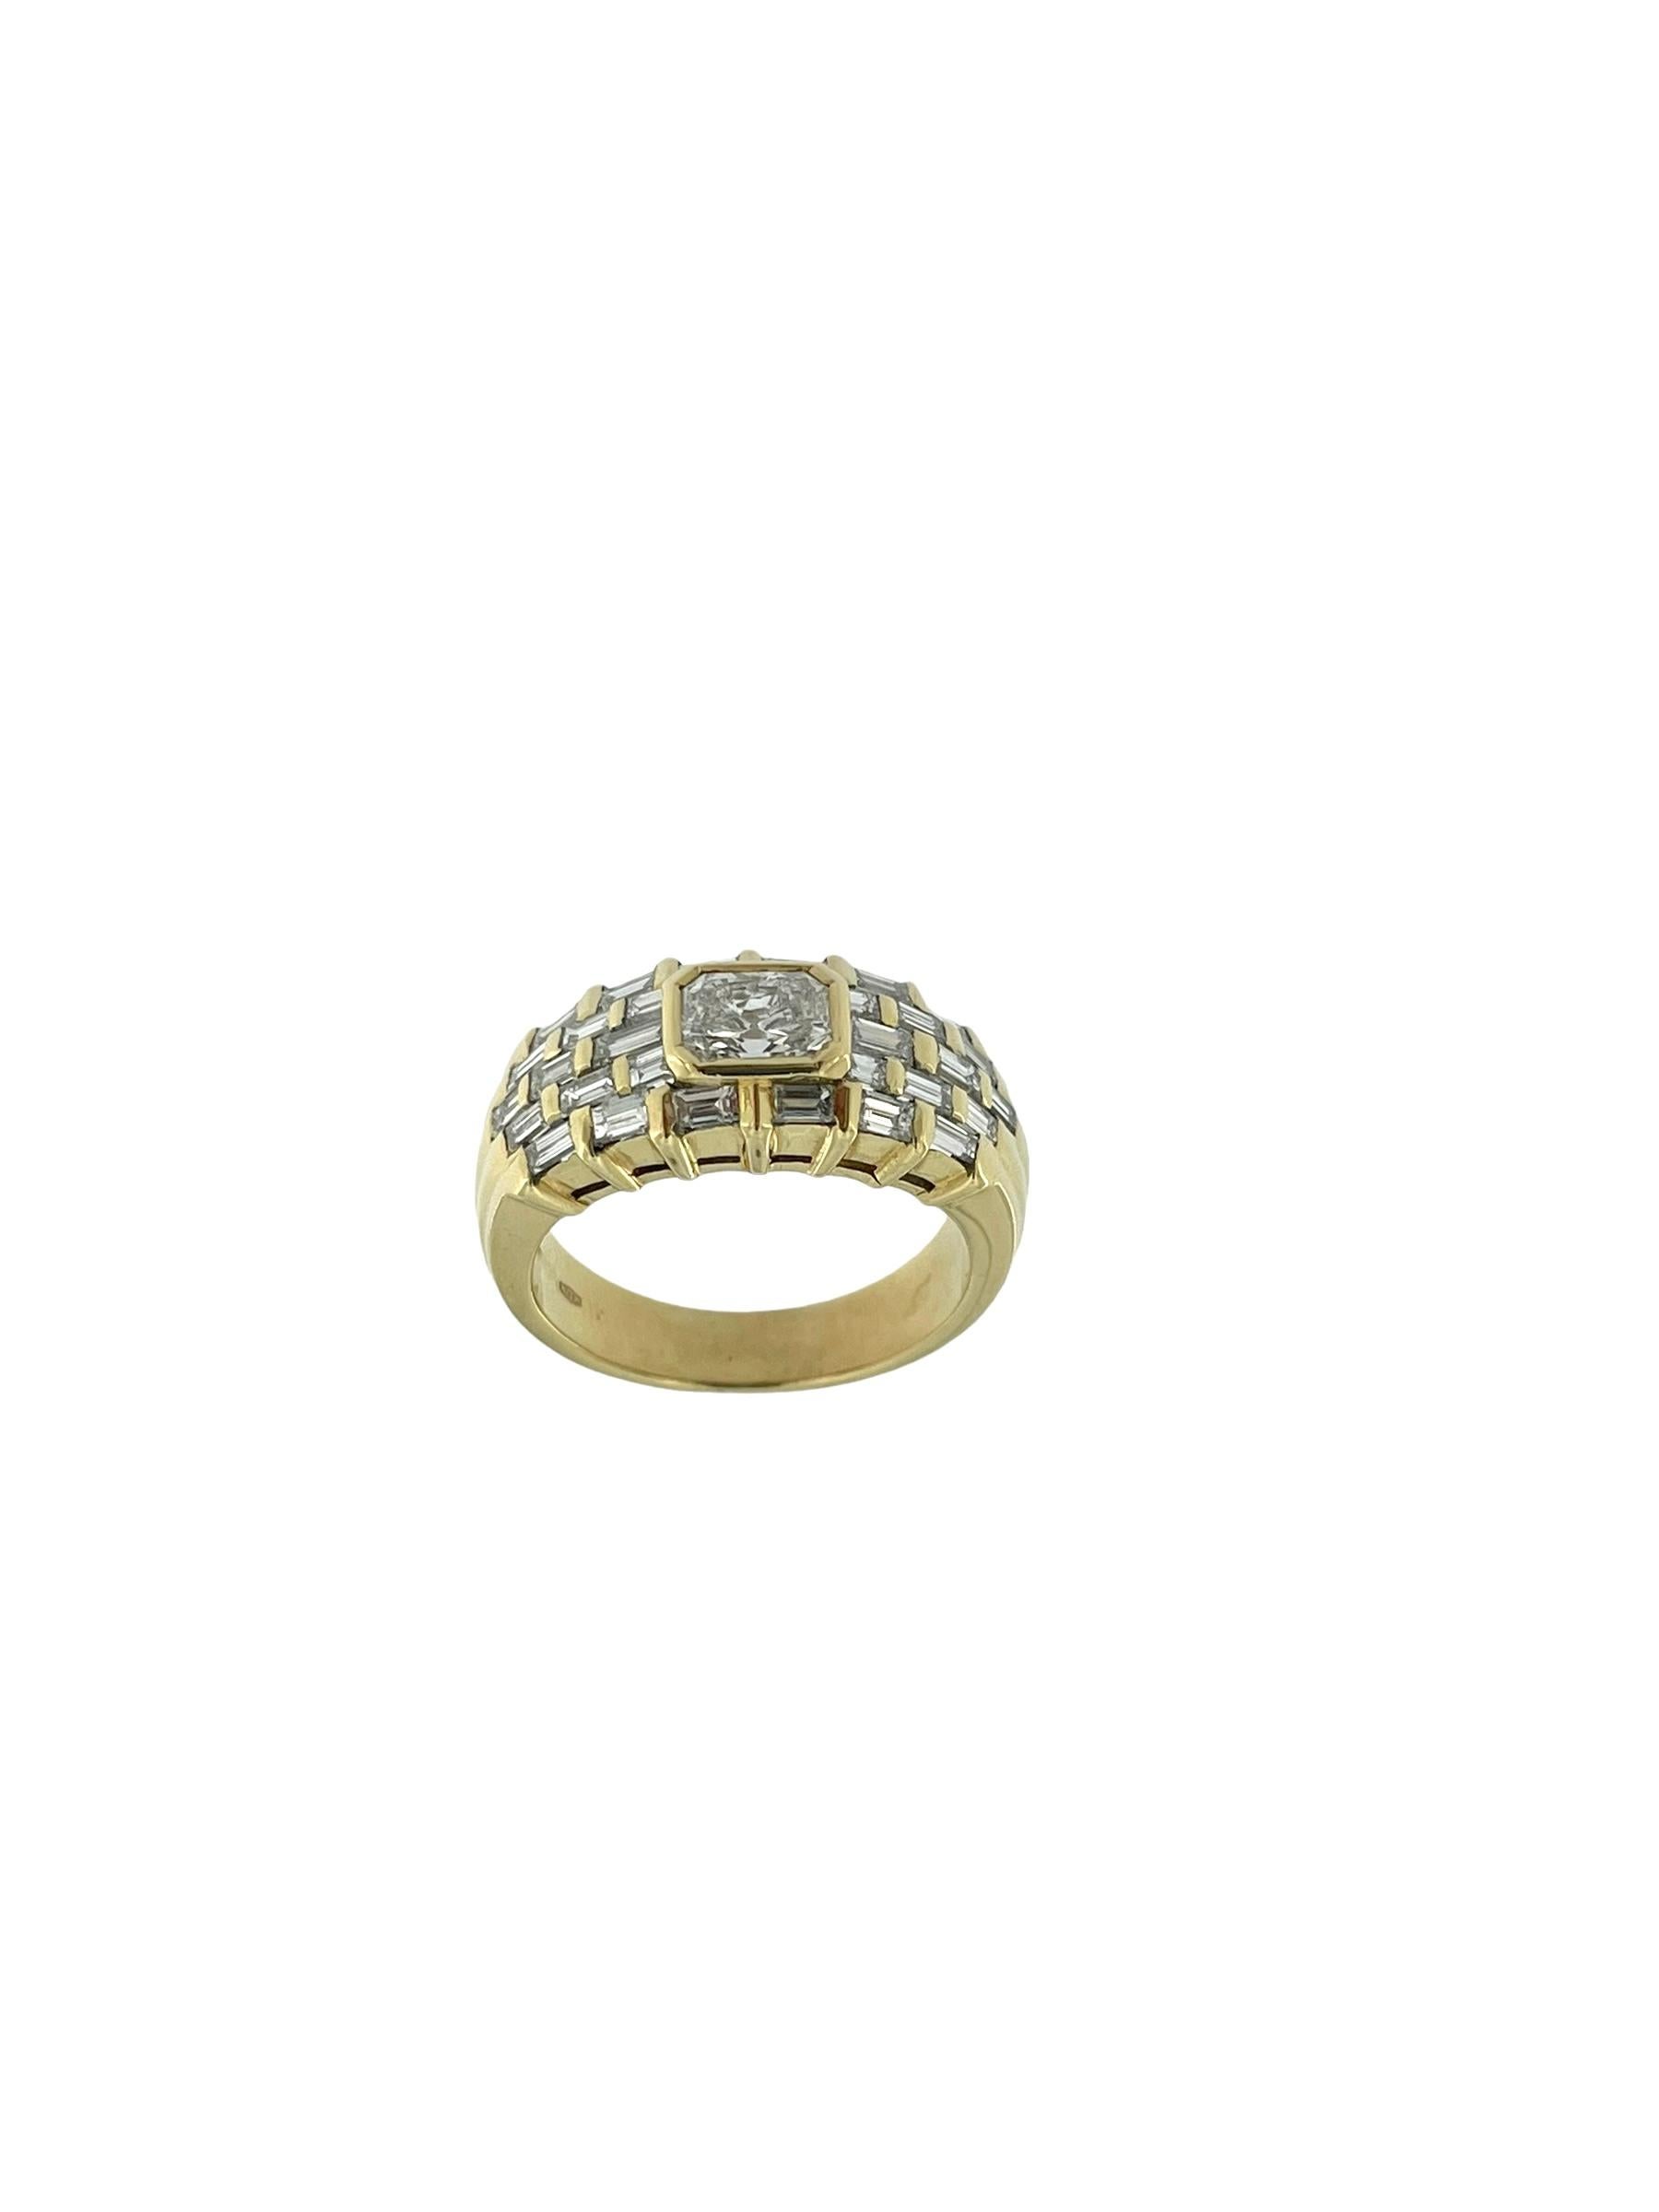 HRD Certified Yellow Gold Cocktail Ring 1.90ct Diamonds In Good Condition For Sale In Esch sur Alzette, Esch-sur-Alzette